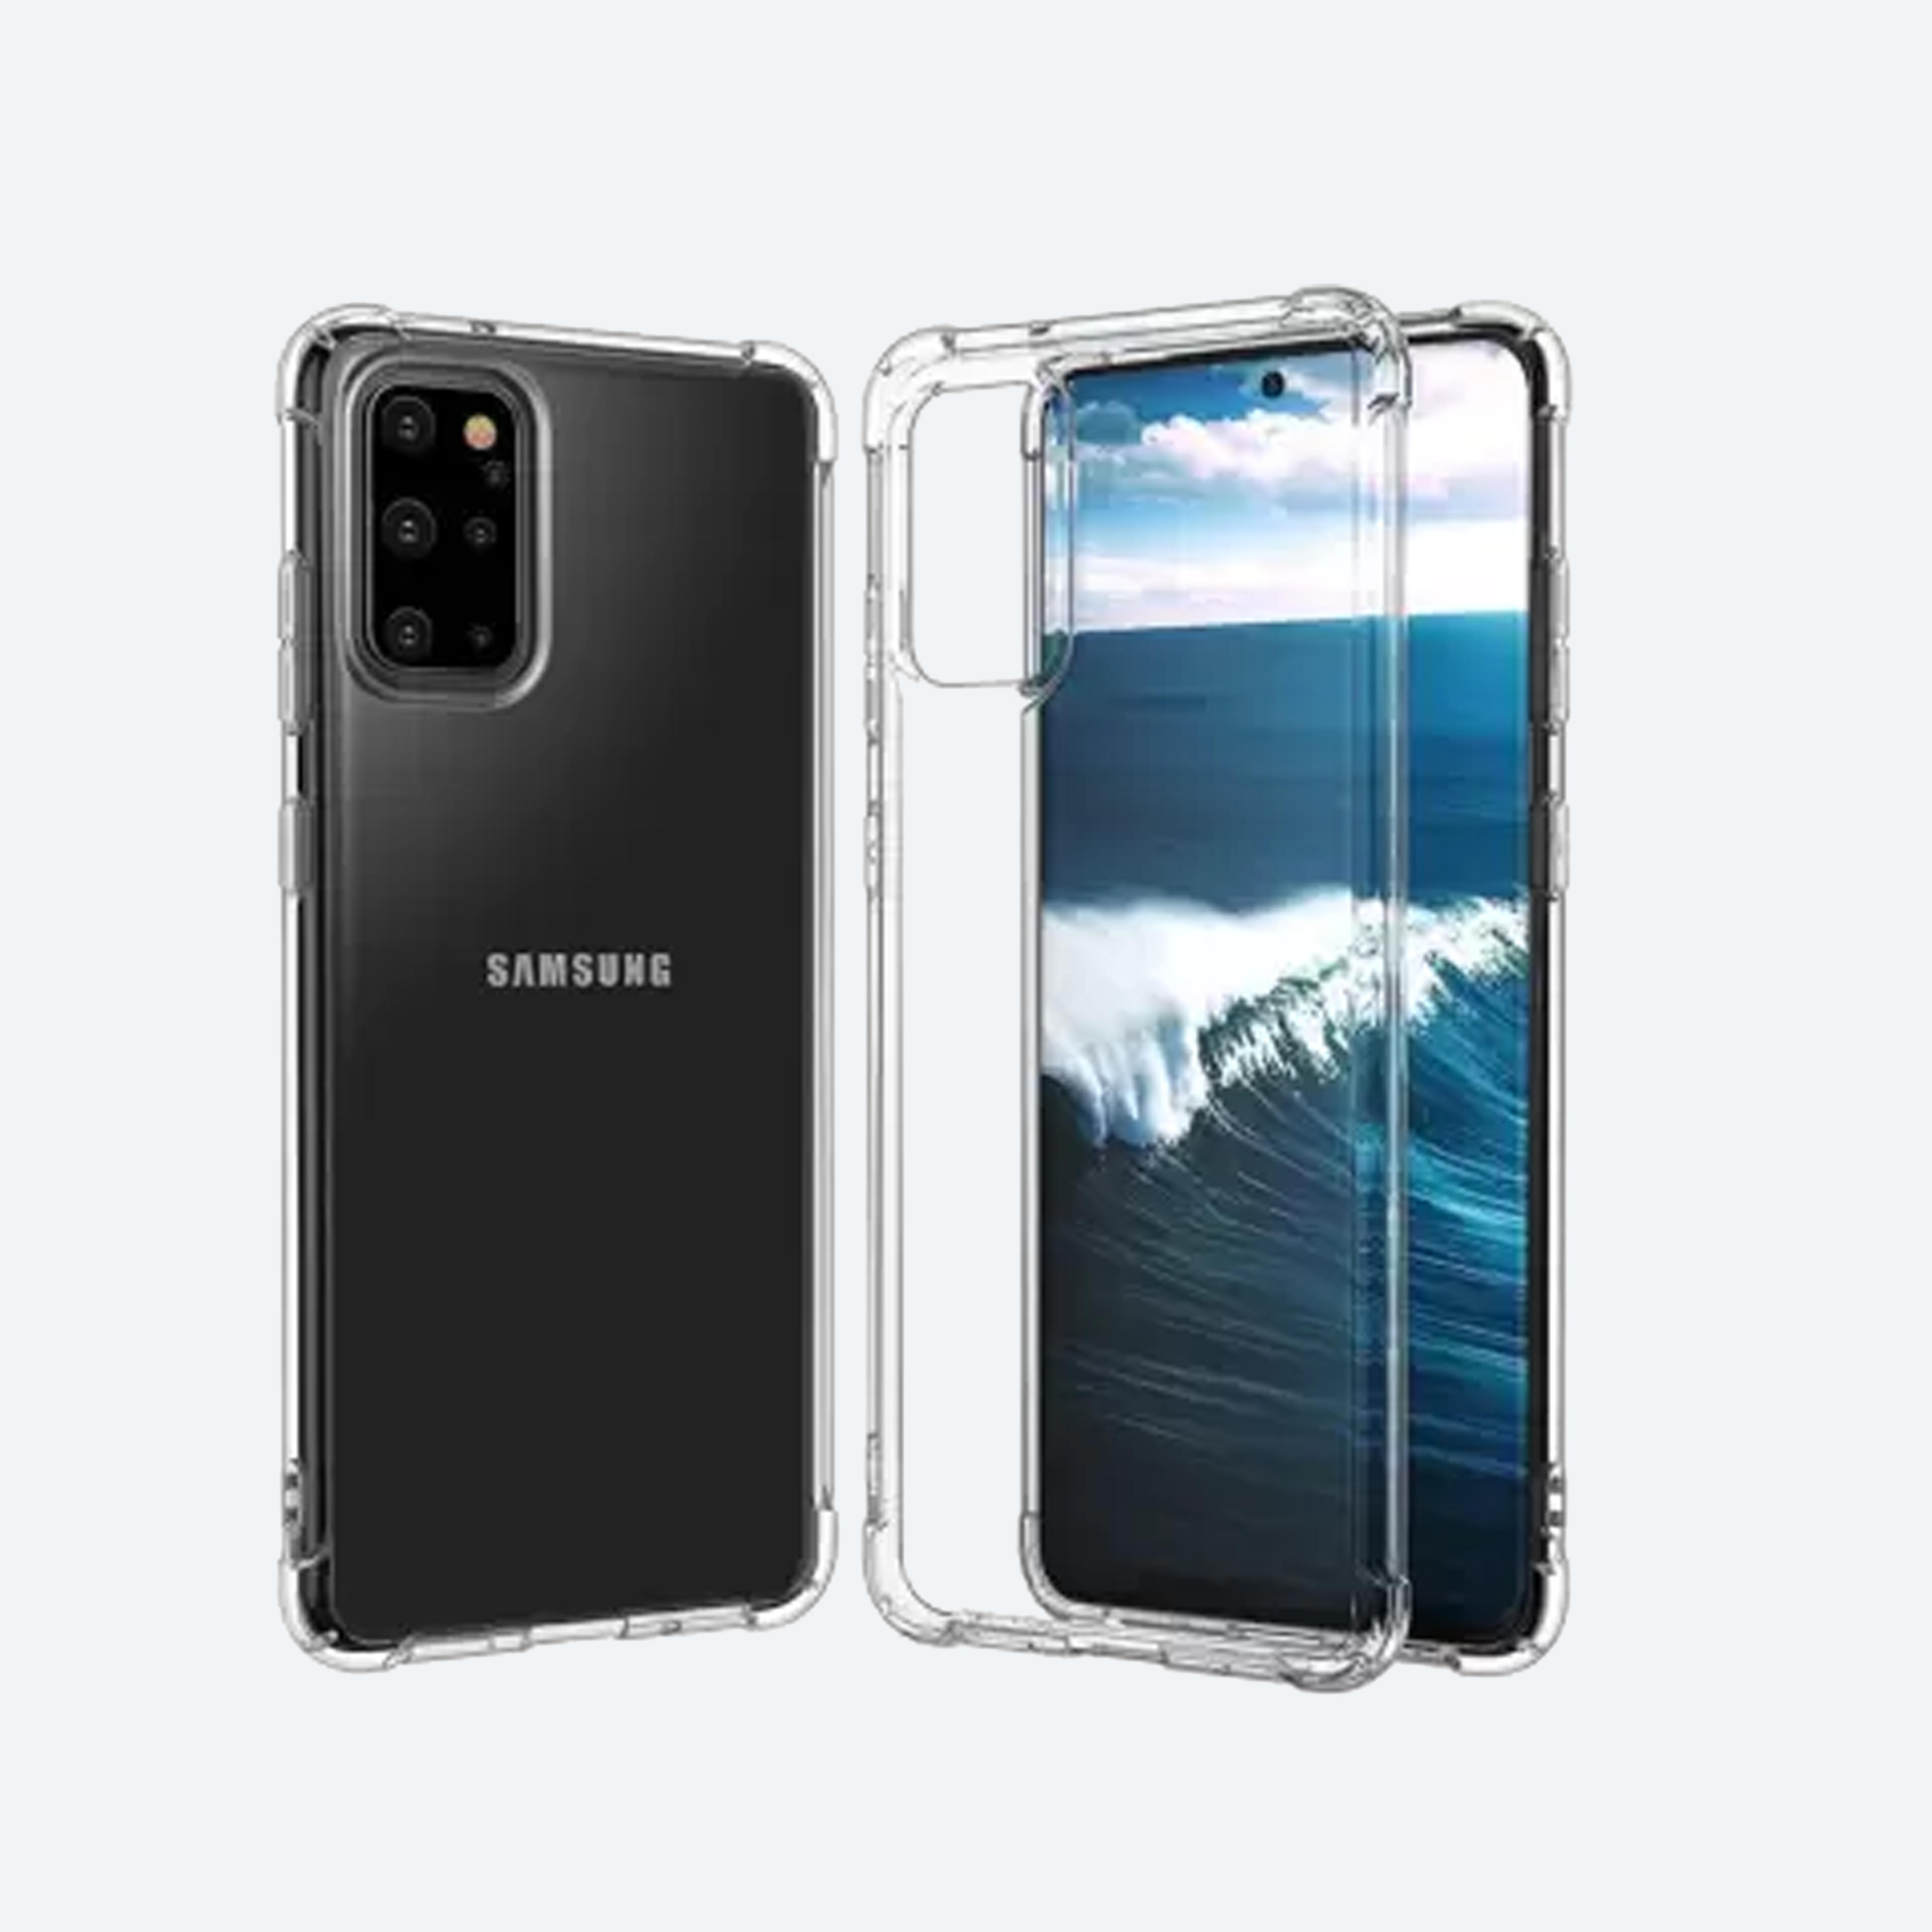 Samsung Galaxy S20 Transparent Back Cover